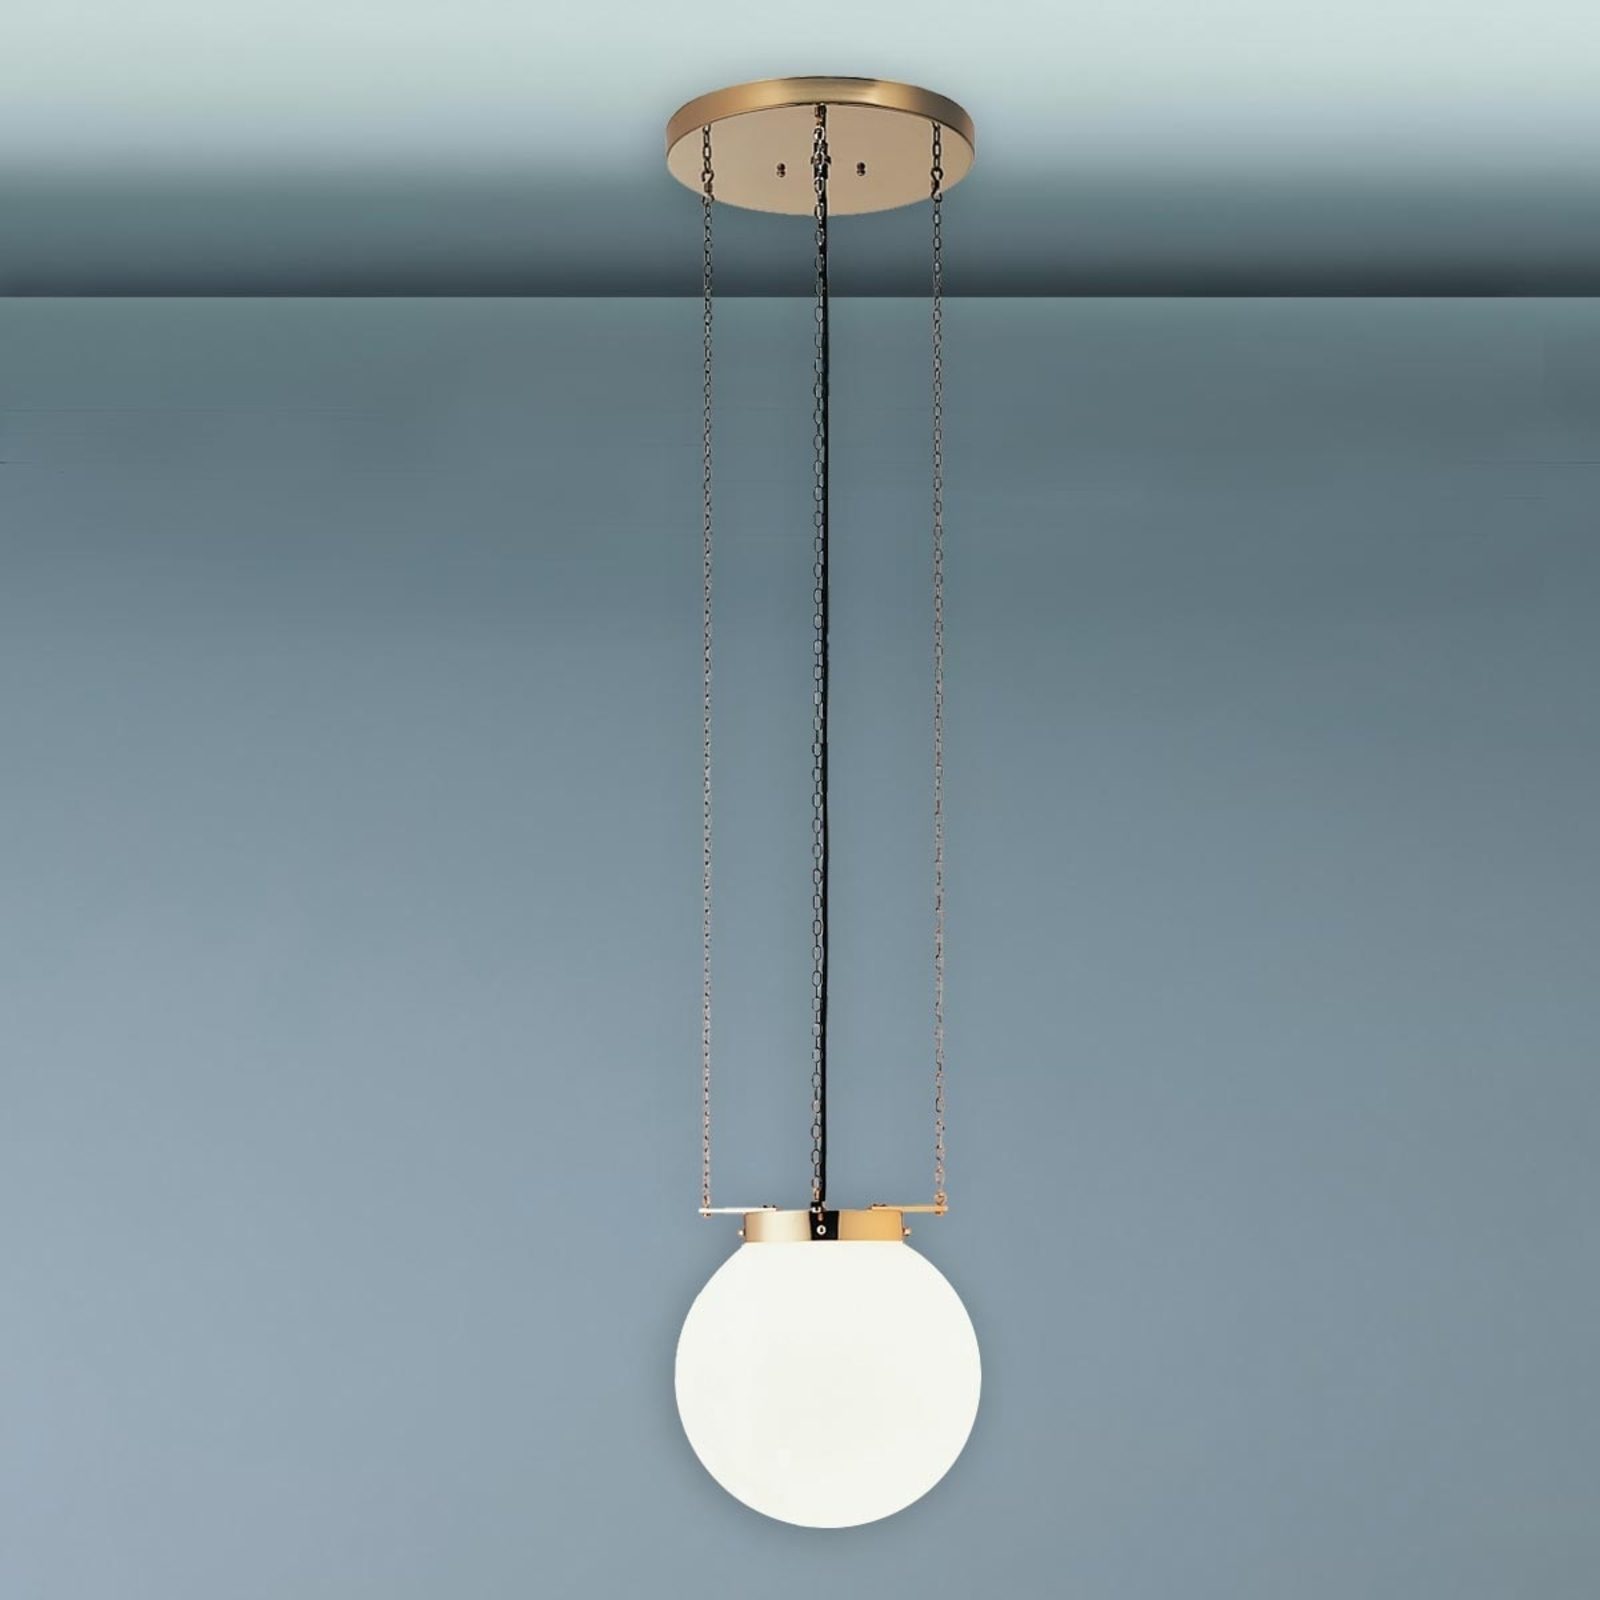 Hanging light in the Bauhaus style, brass, 35 cm